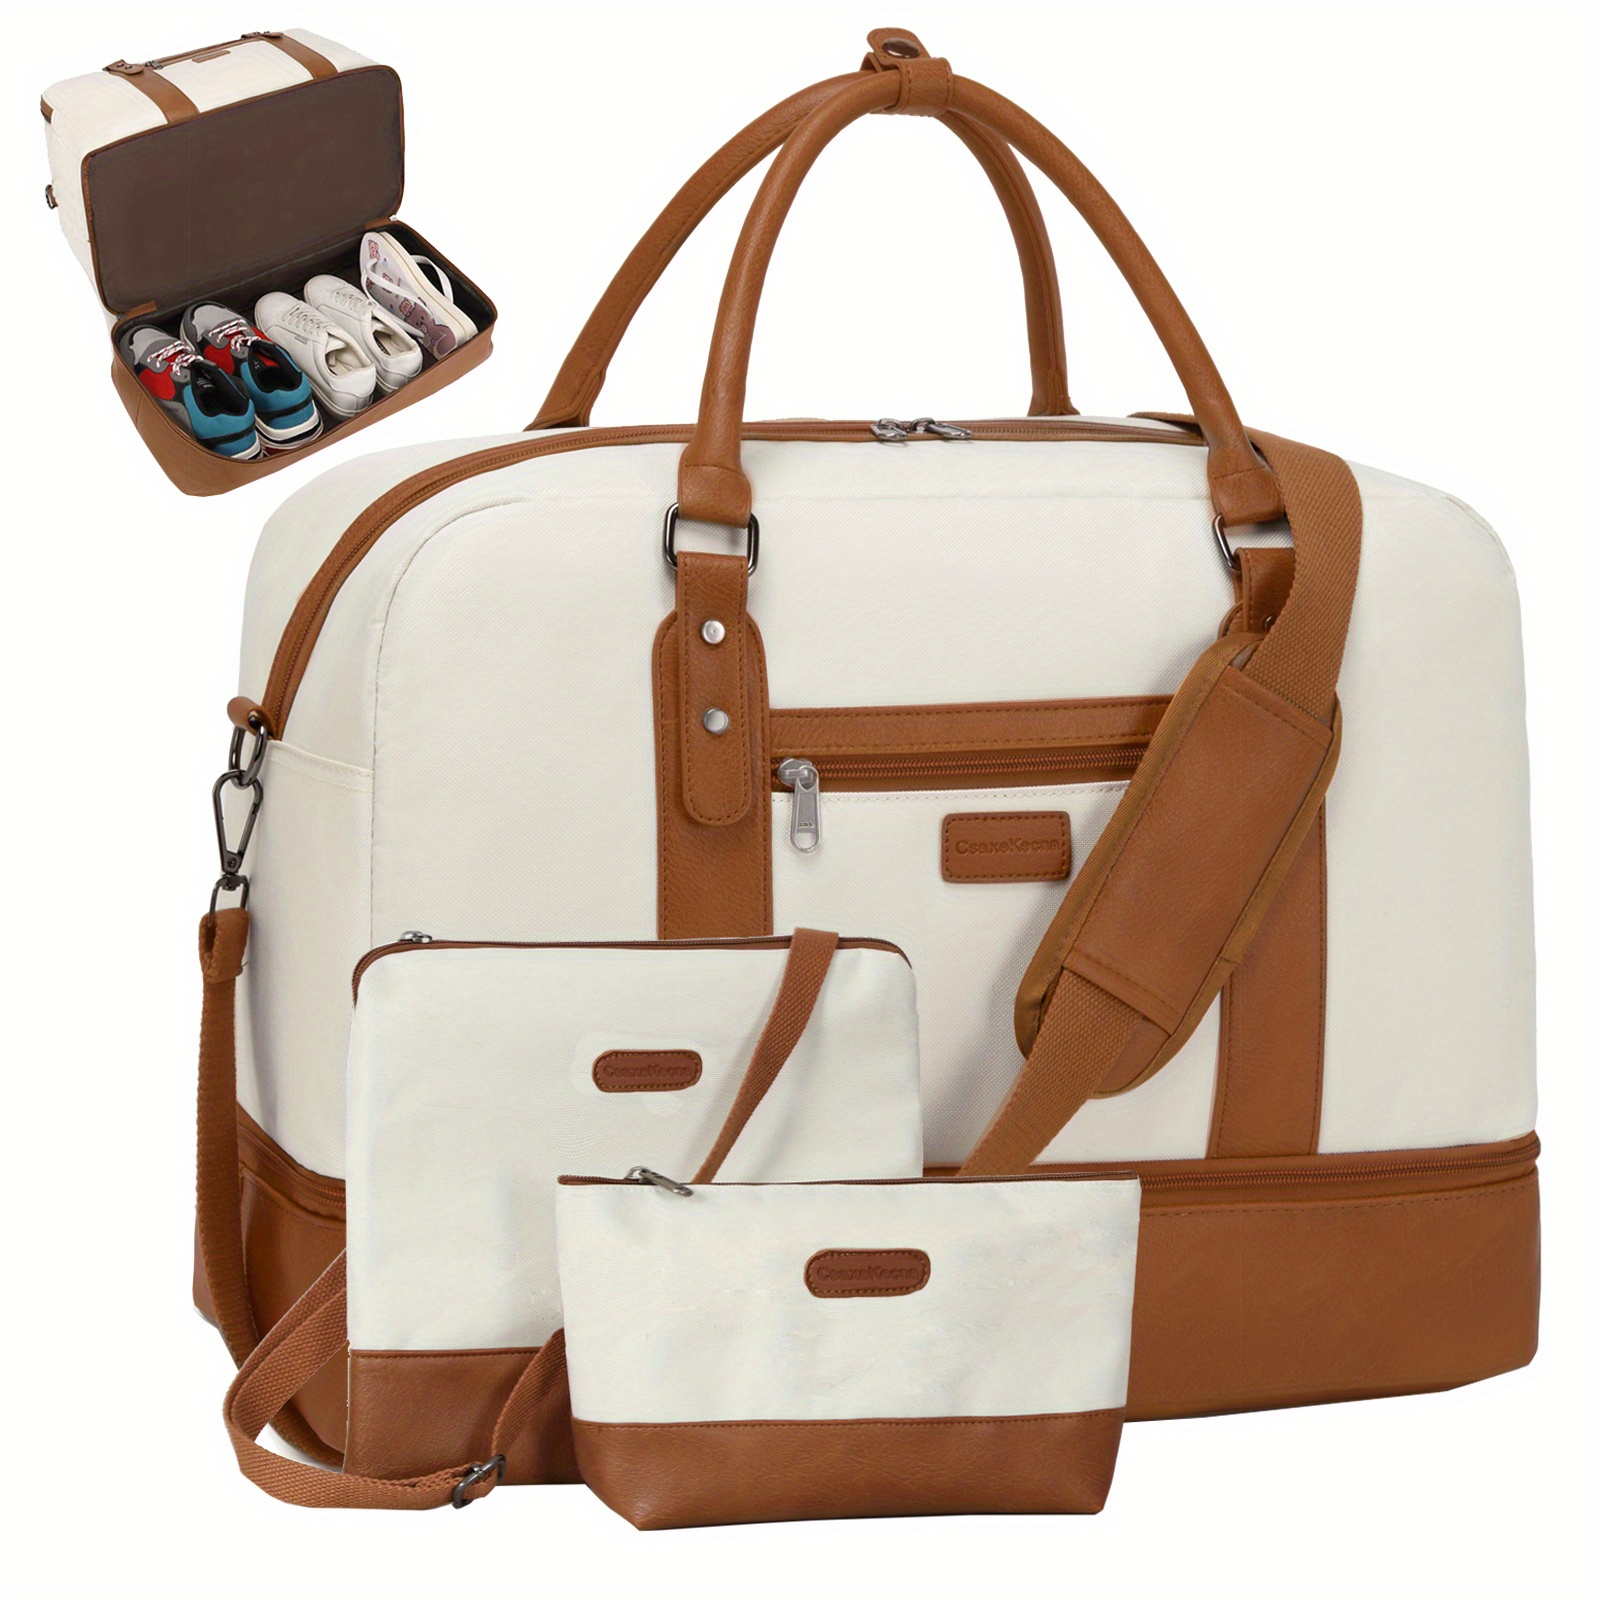 Women's Bag Shoulder Tote Handbag Beautiful Cherry Blossom Print Zipper  Purse Top-handle Zip Bags for Gym, Work, School